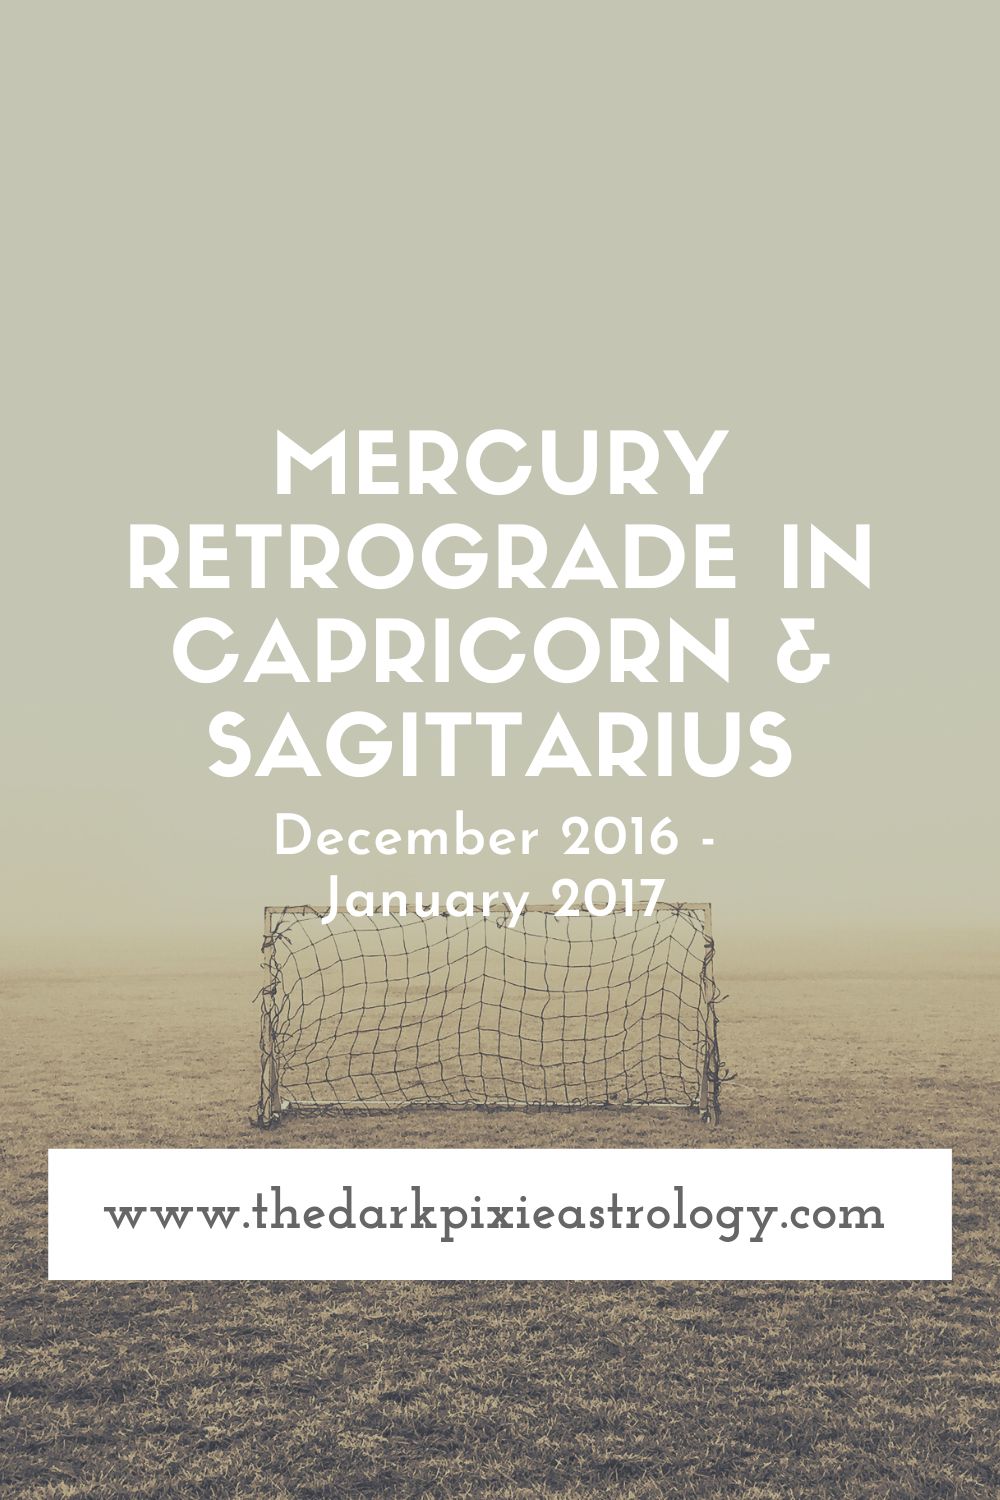 Mercury Retrograde in Capricorn & Sagittarius 2016 - 2017 - The Dark Pixie Astrology